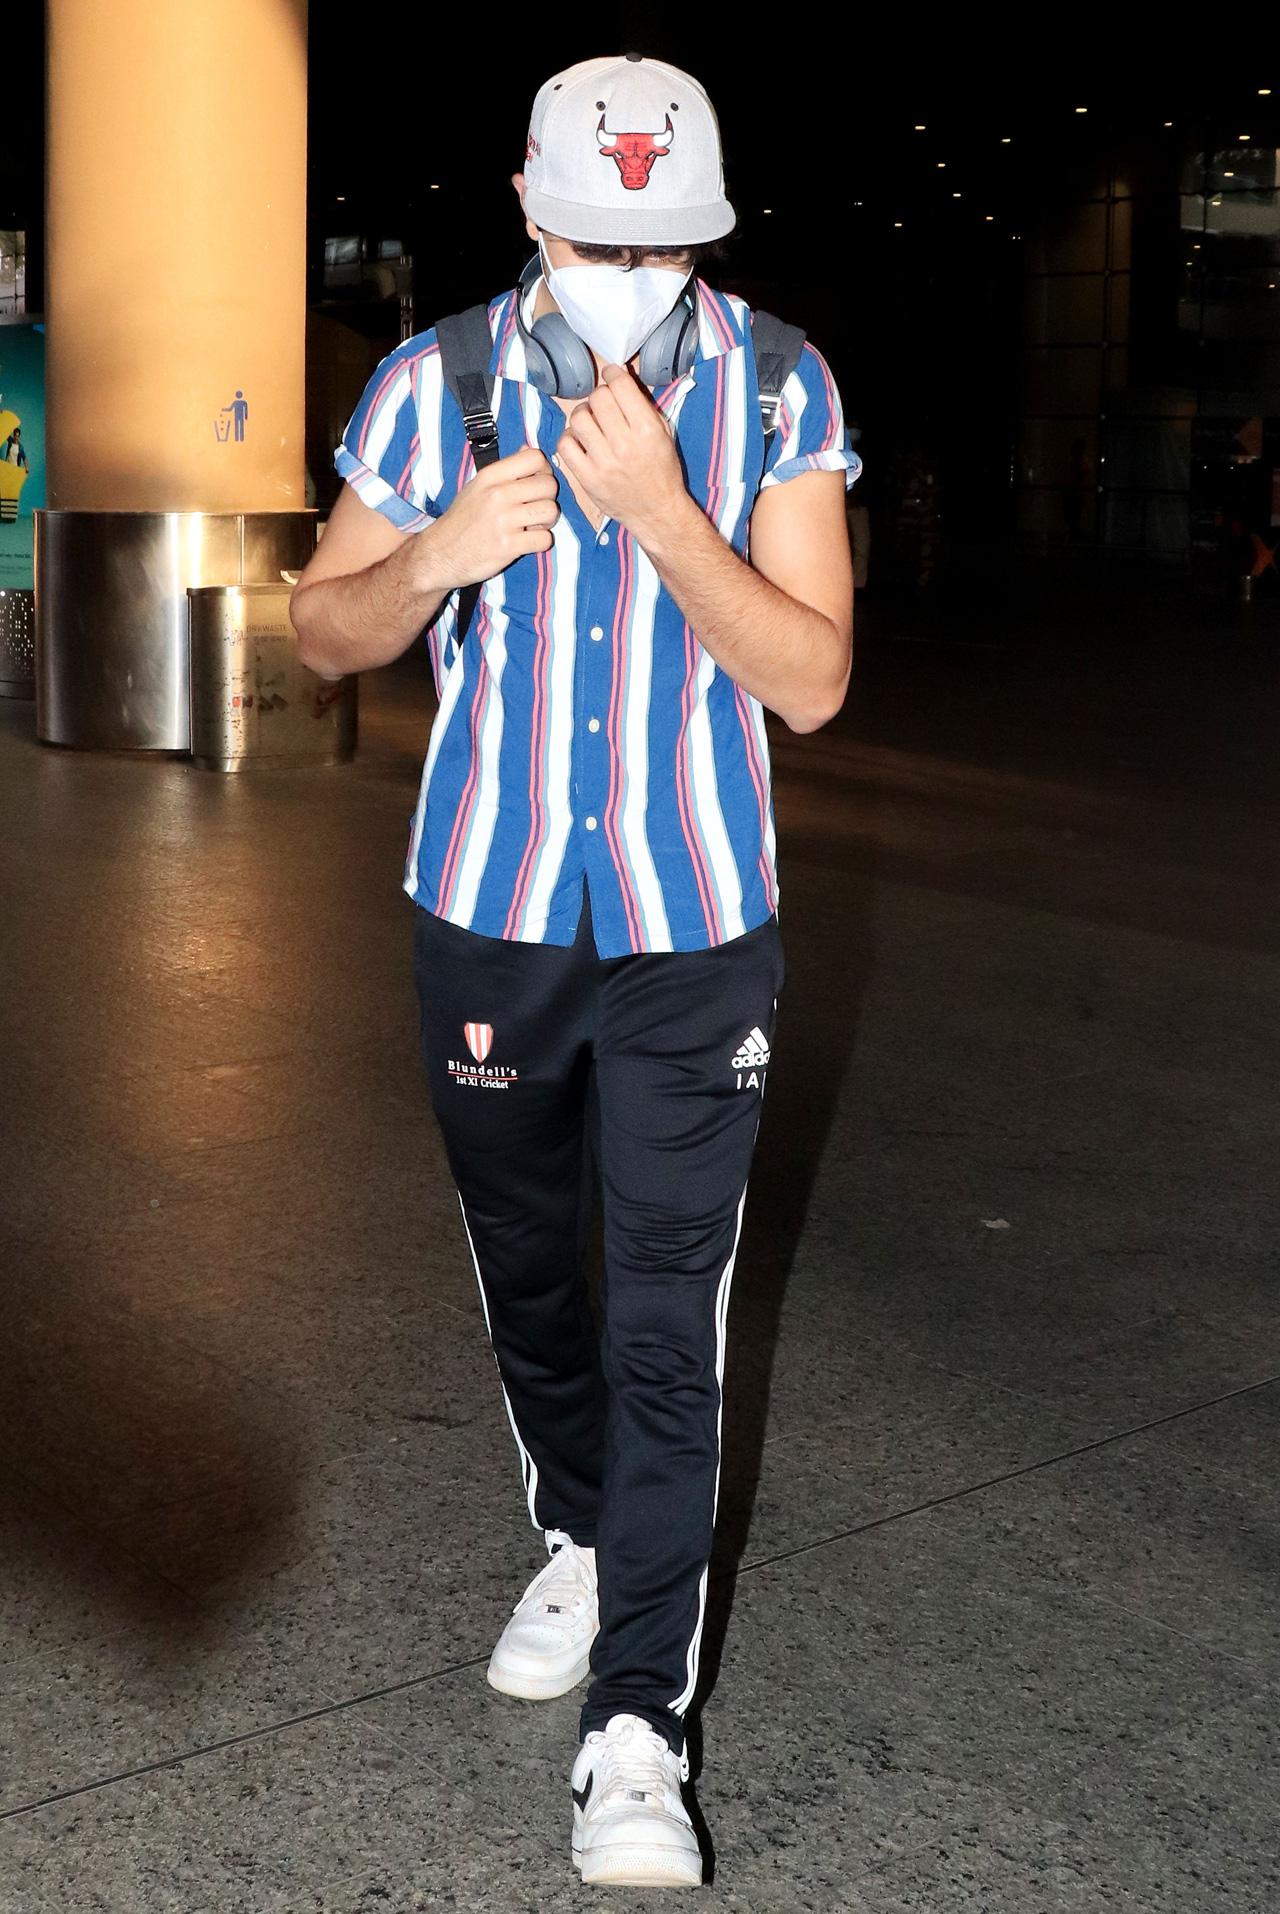 Ibrahim Ali Khan striped shirt and track pants as he arrived at Mumbai airport.